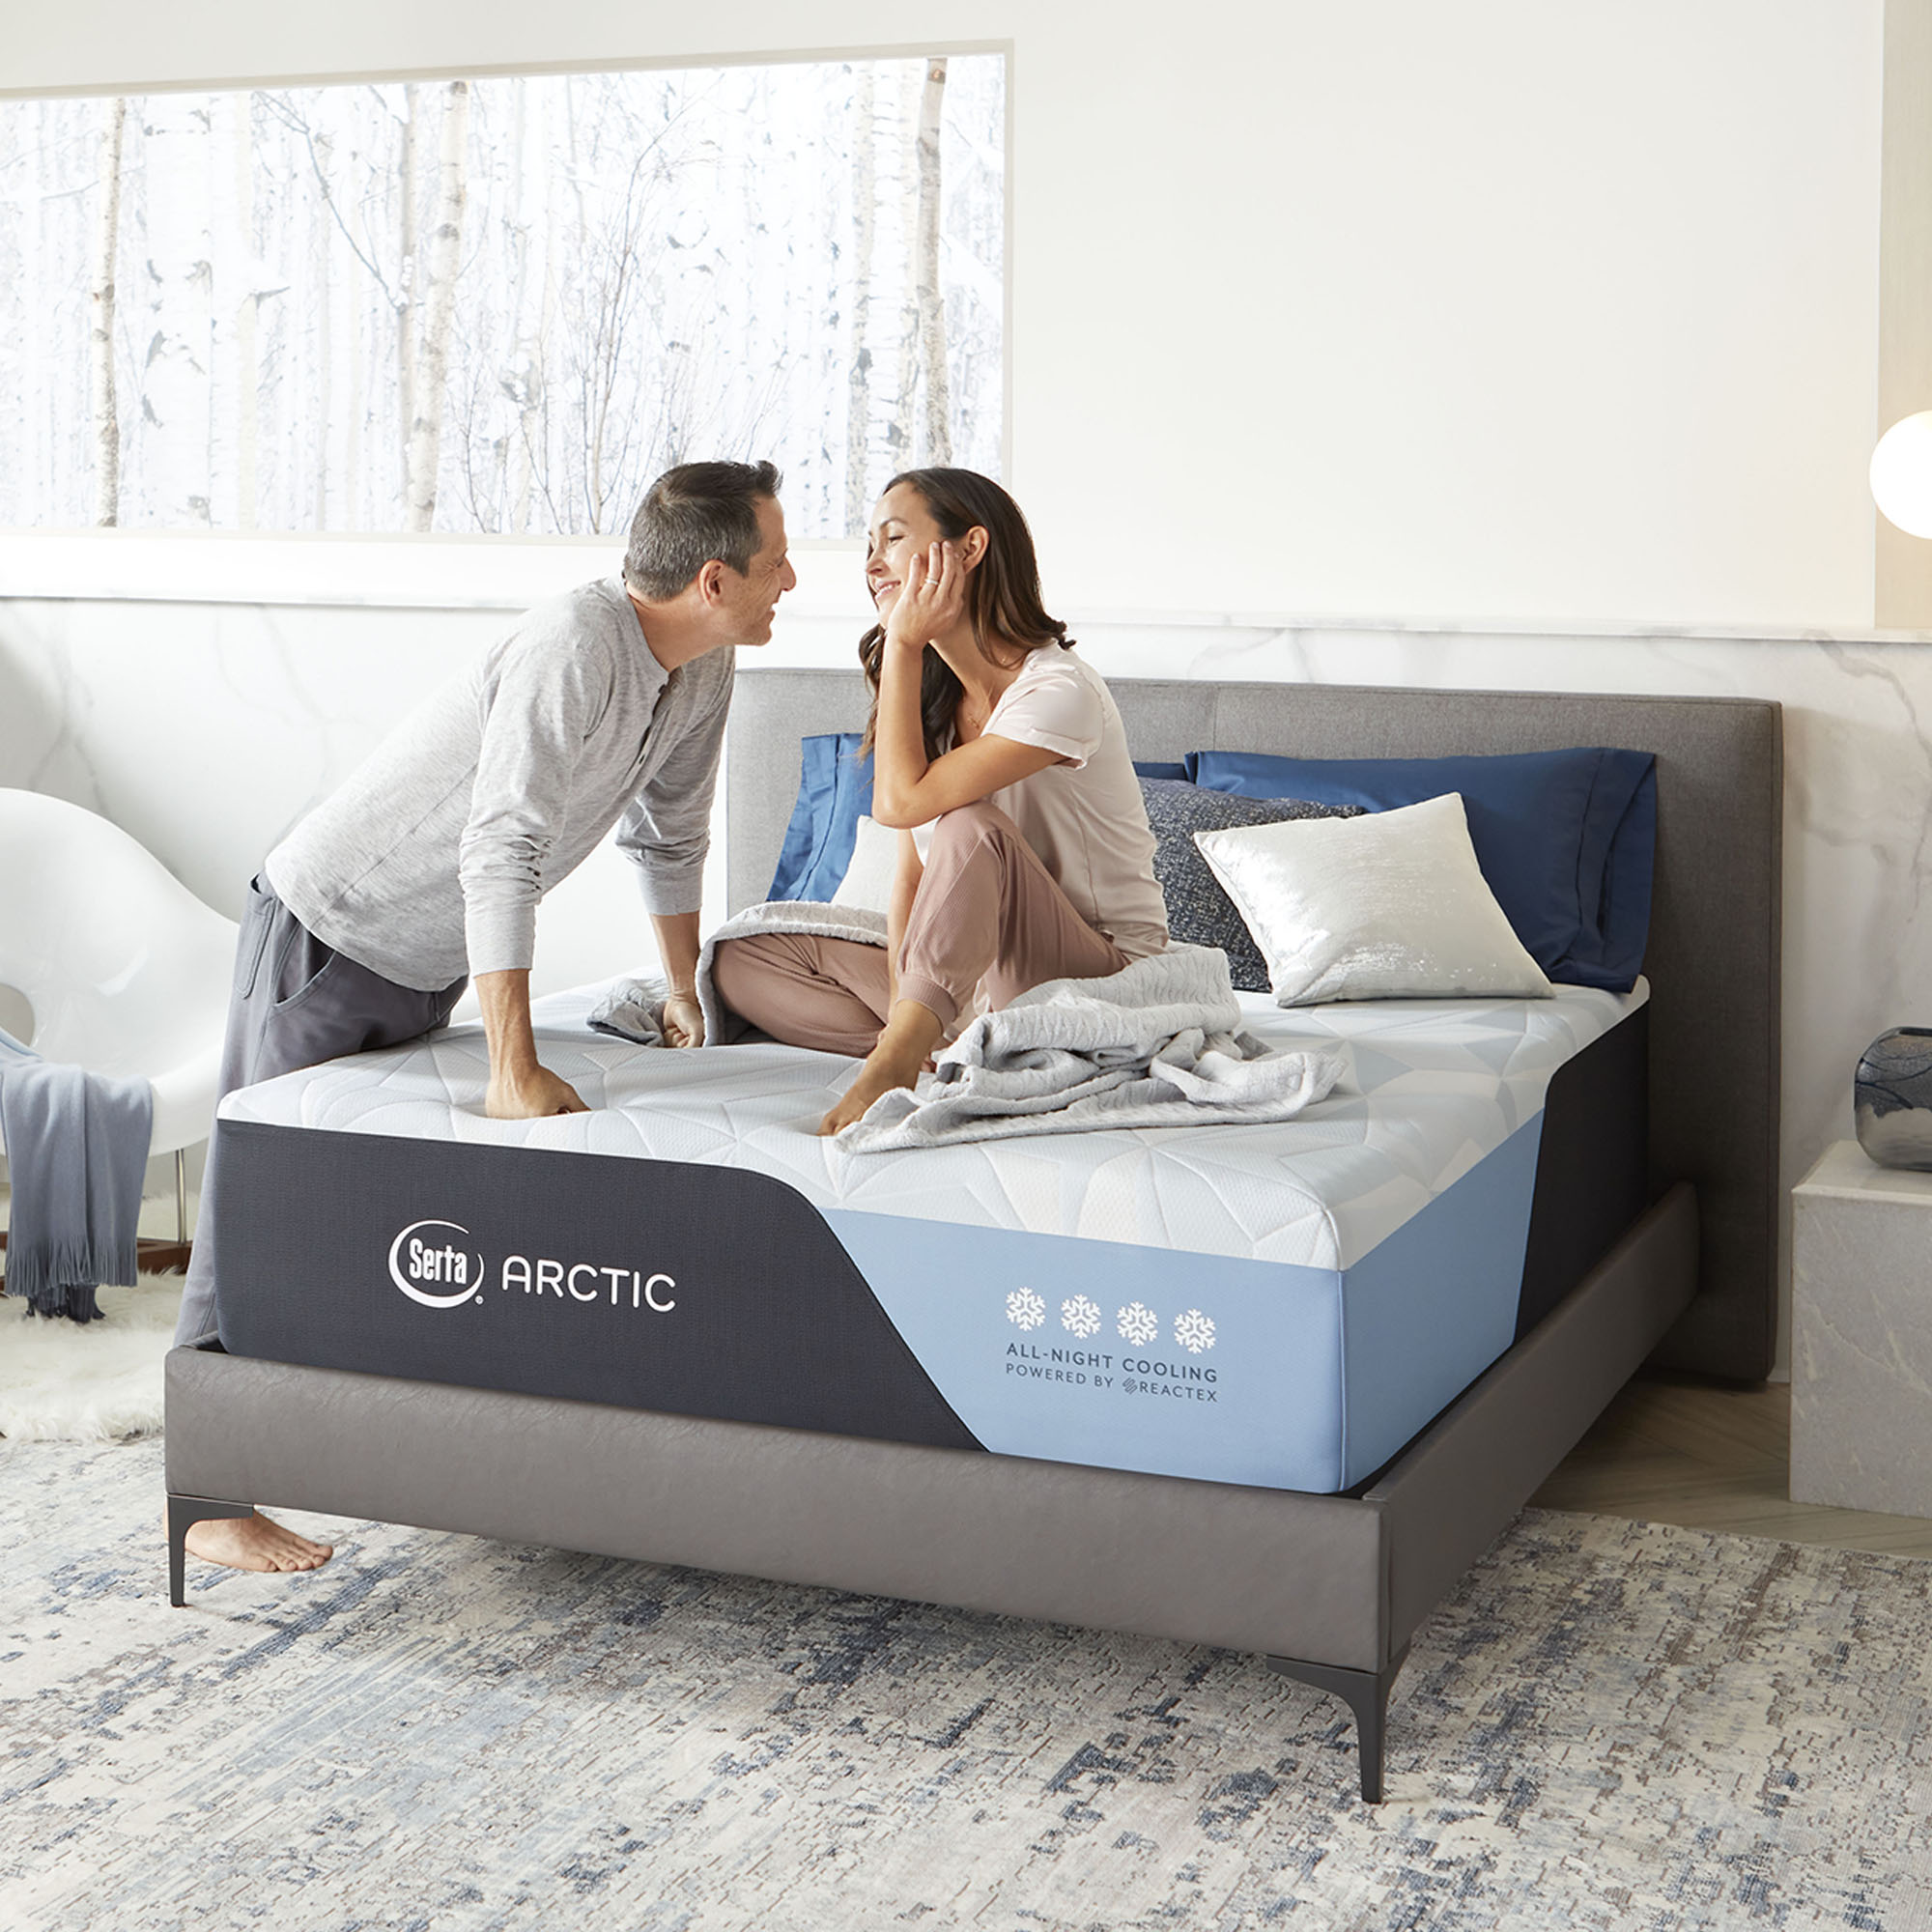 Serta Arctic Premier Memory Foam mattress couple